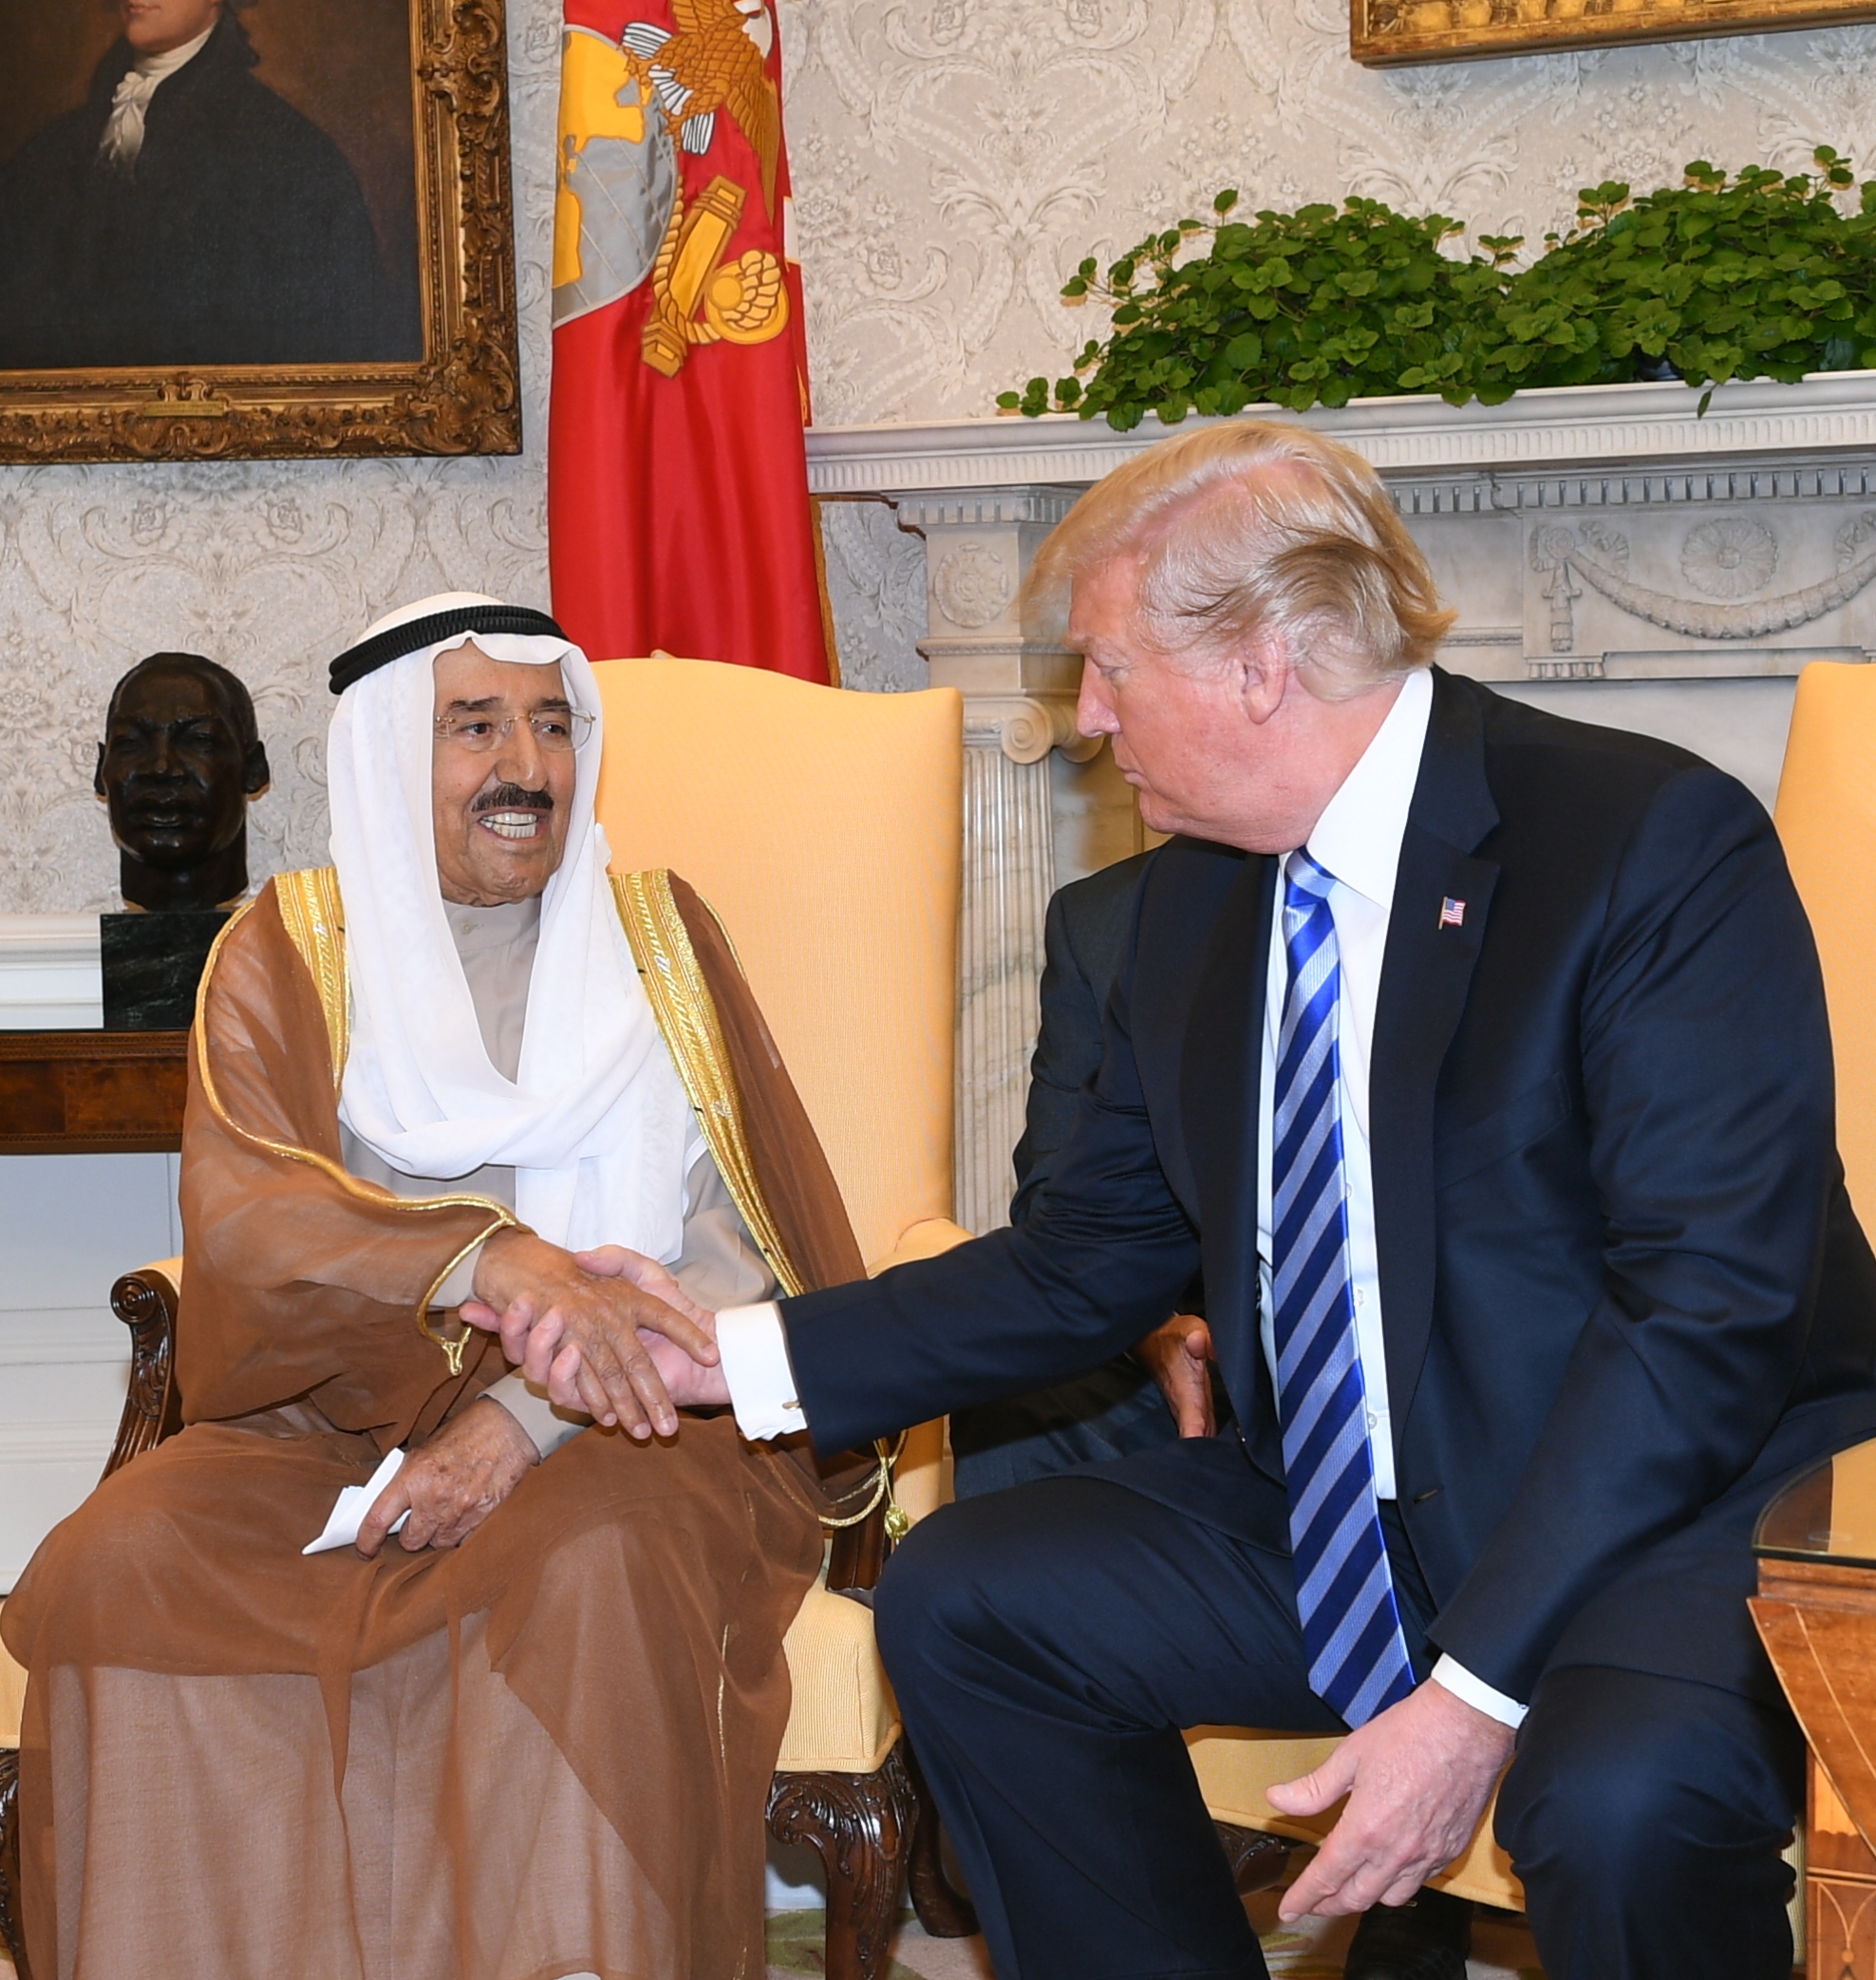 His Highness the Amir Sheikh Sabah Al-Ahmad Al-Jaber Al-Sabah with US President Donald Trump